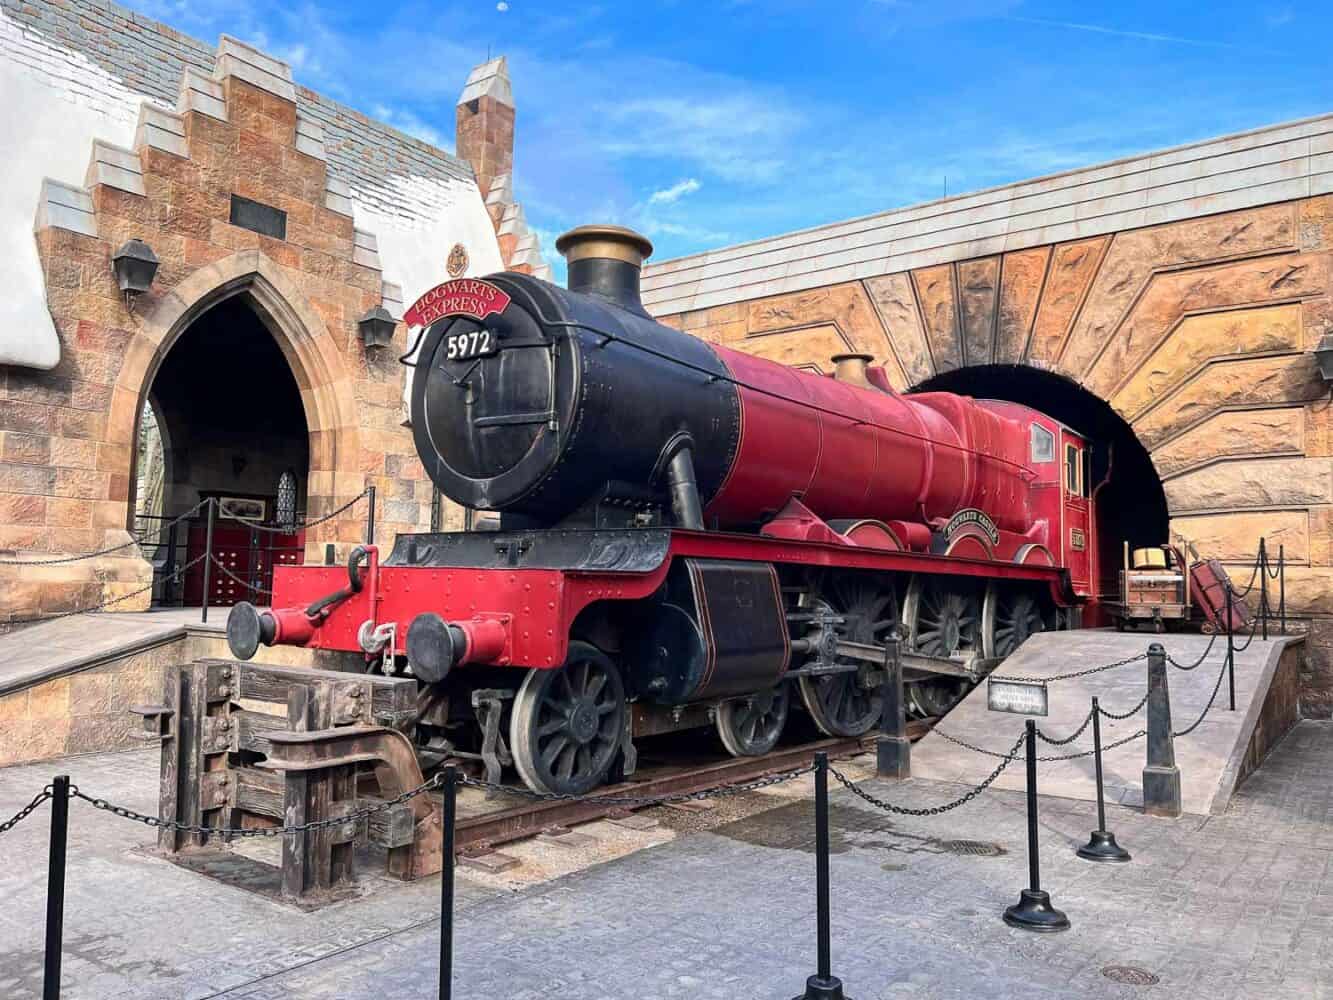 Hogwarts Express, Islands of Adventure, Universal Orlando, Florida, USA